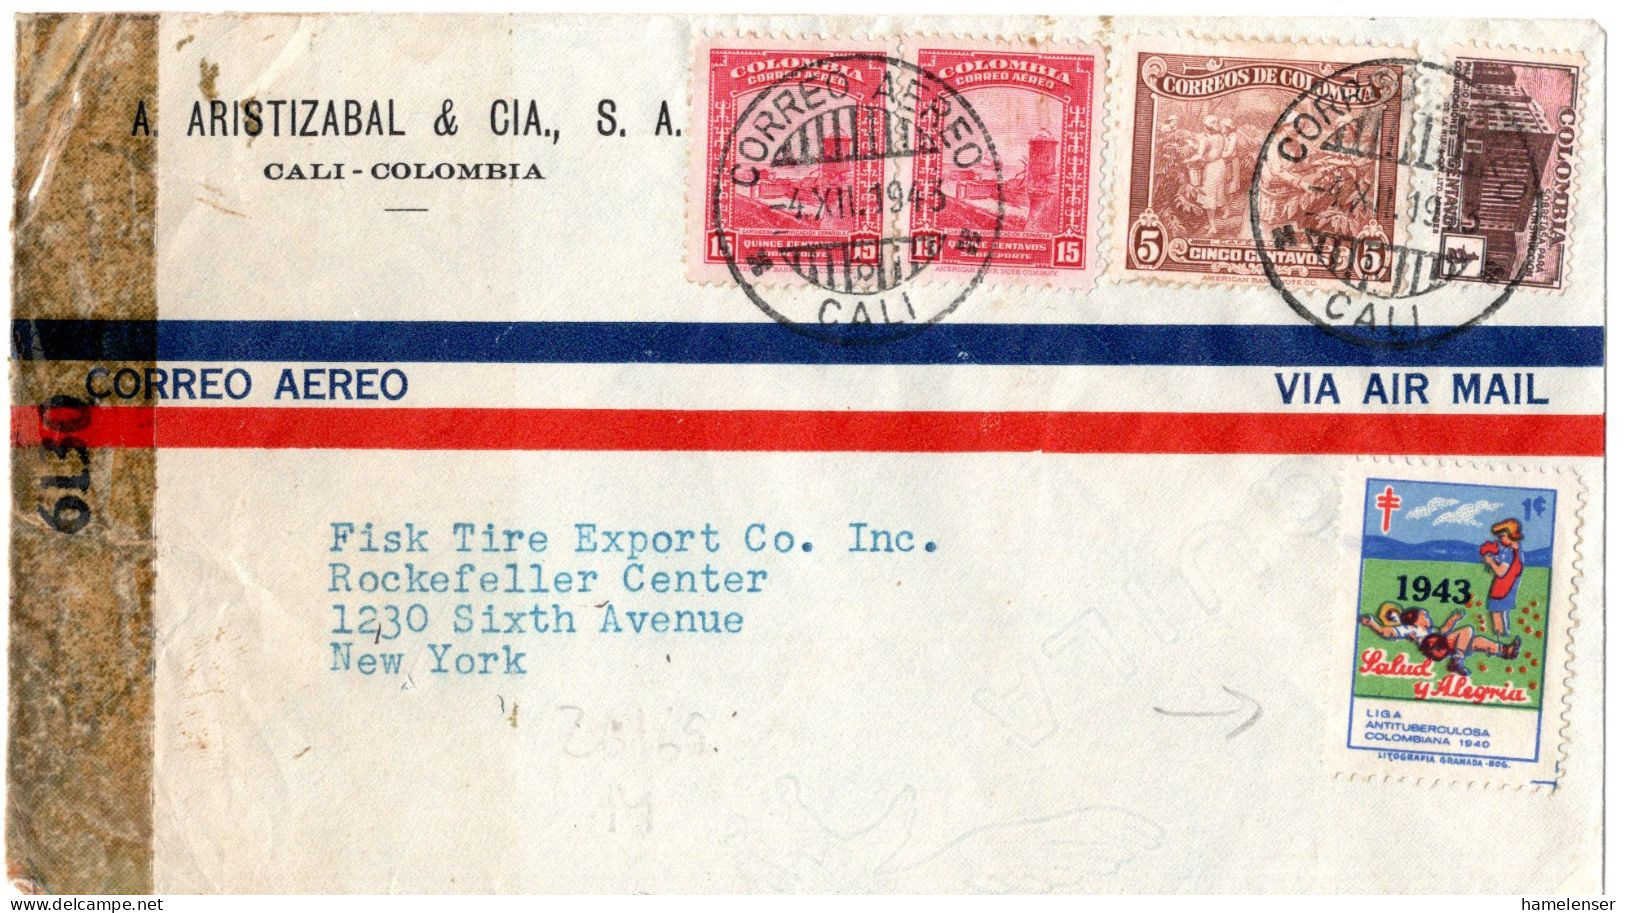 72443 - Kolumbien - 1943 - 2@15c Luftpost MiF A LpBf CALI -> New York, NY (USA), M US-Zensur & Tbc-Aufkleber - Kolumbien